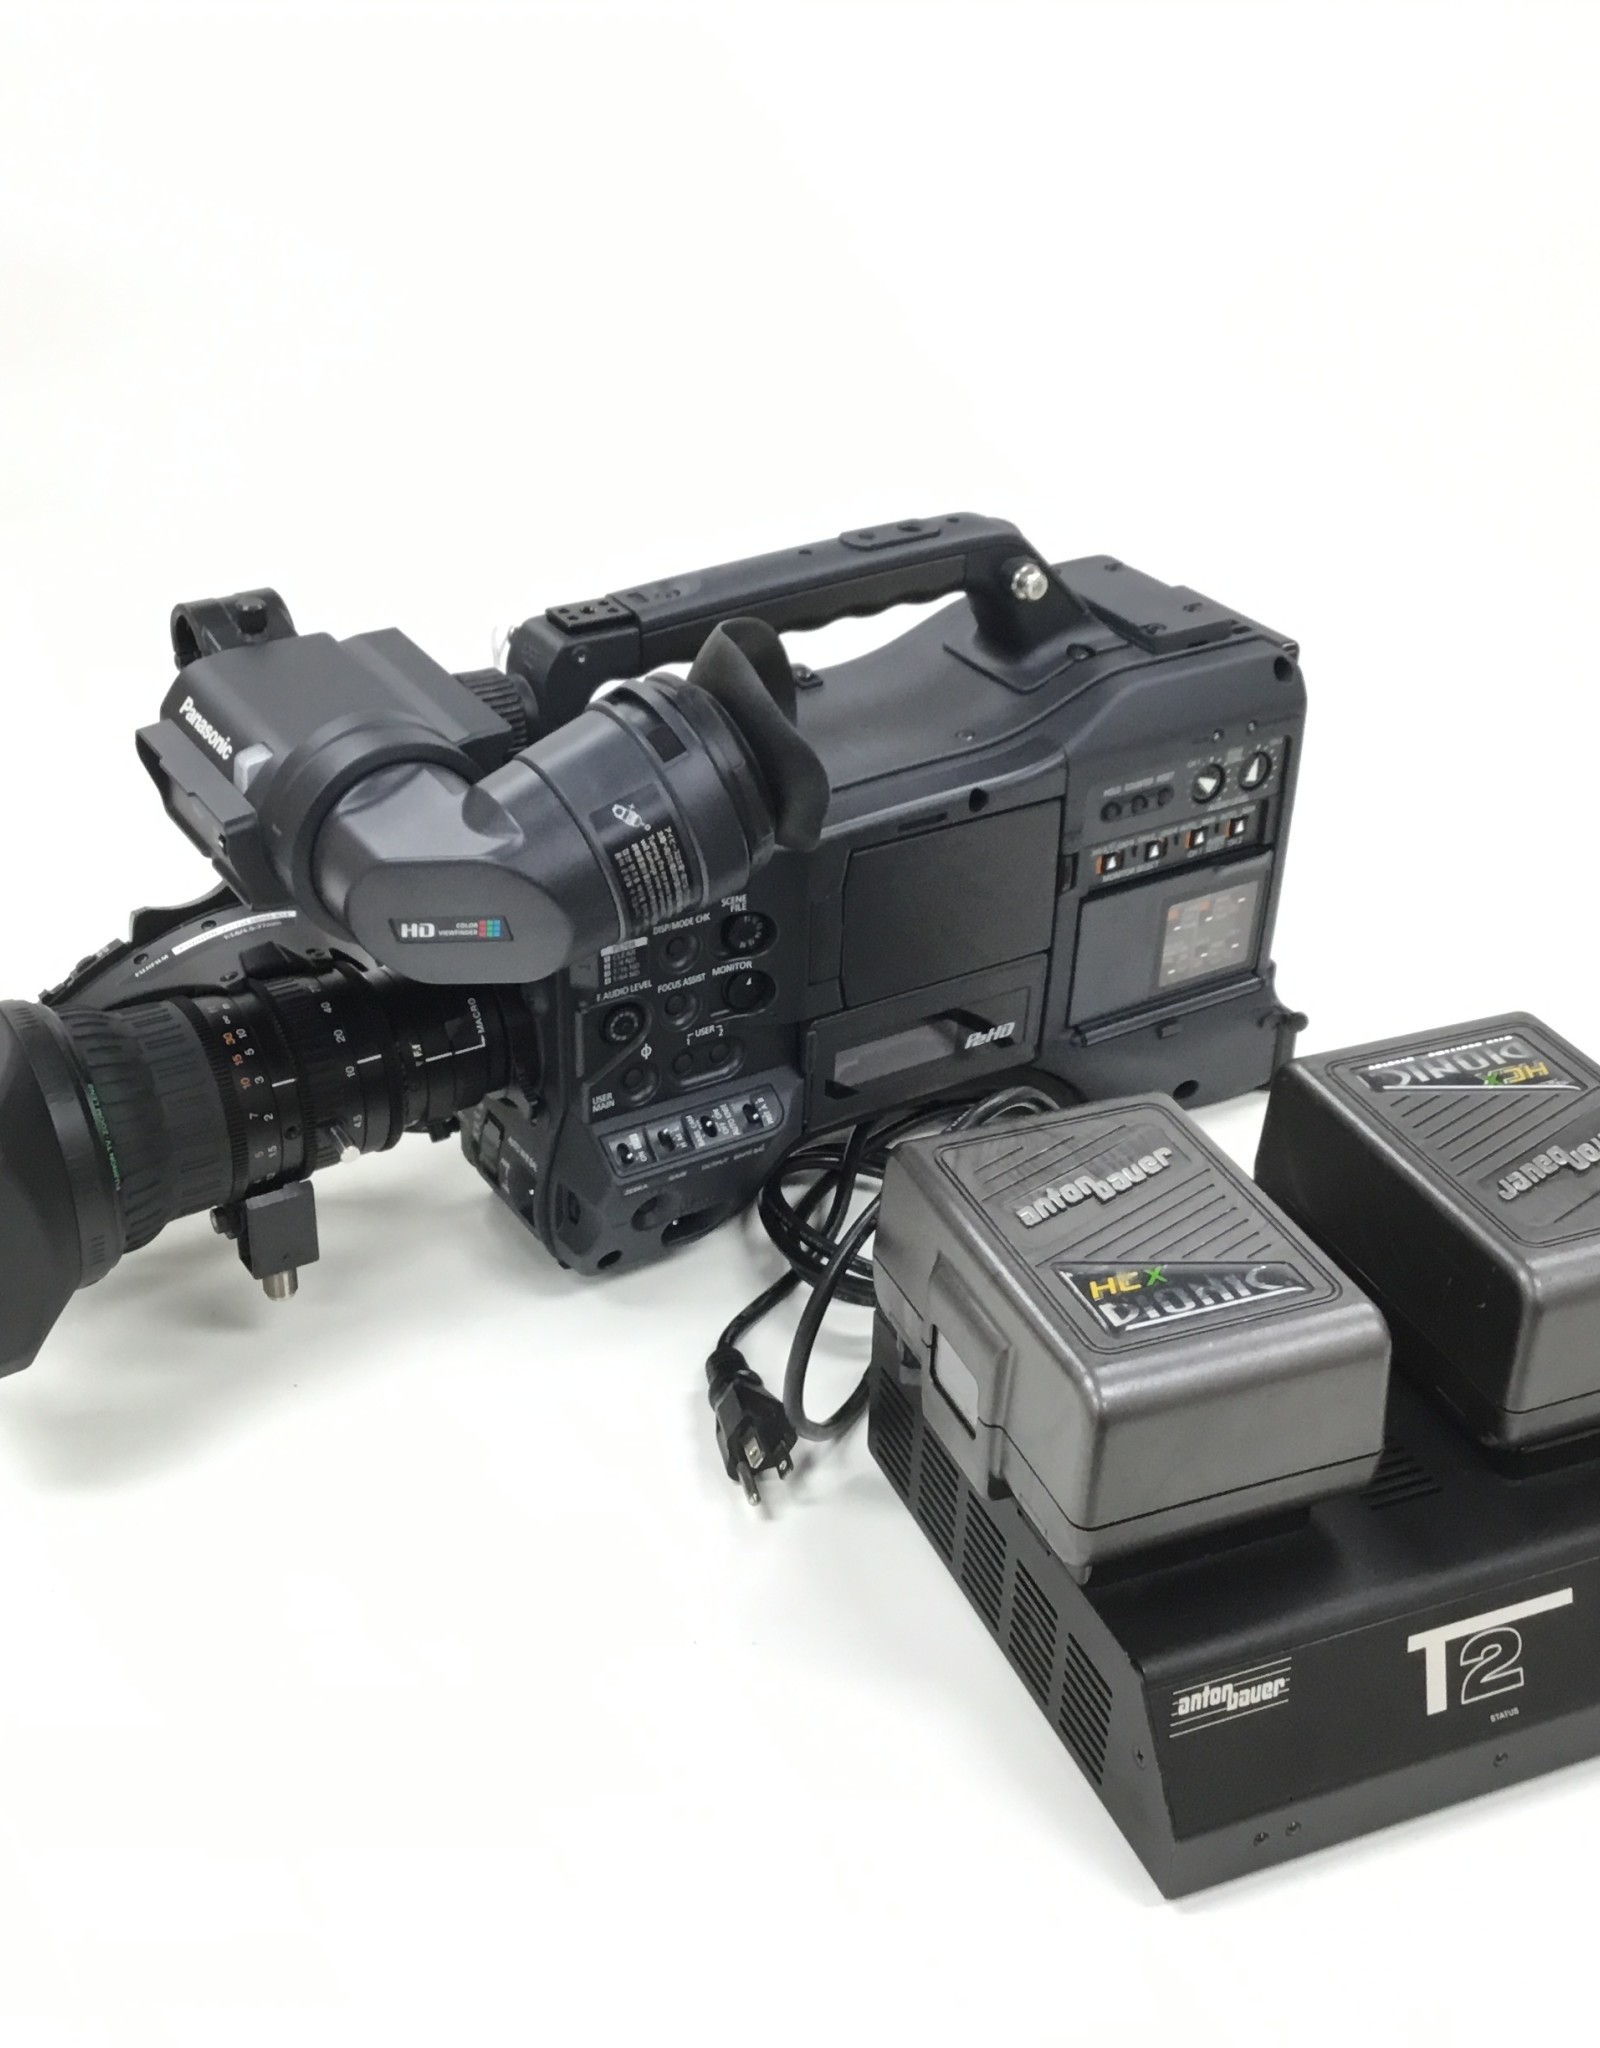 PANASONIC Panasonic AG-HPX370P Camcorder w/ Fujinon 4.5-77mm, Bauer Batt 2 ea, charger, Case Used EX